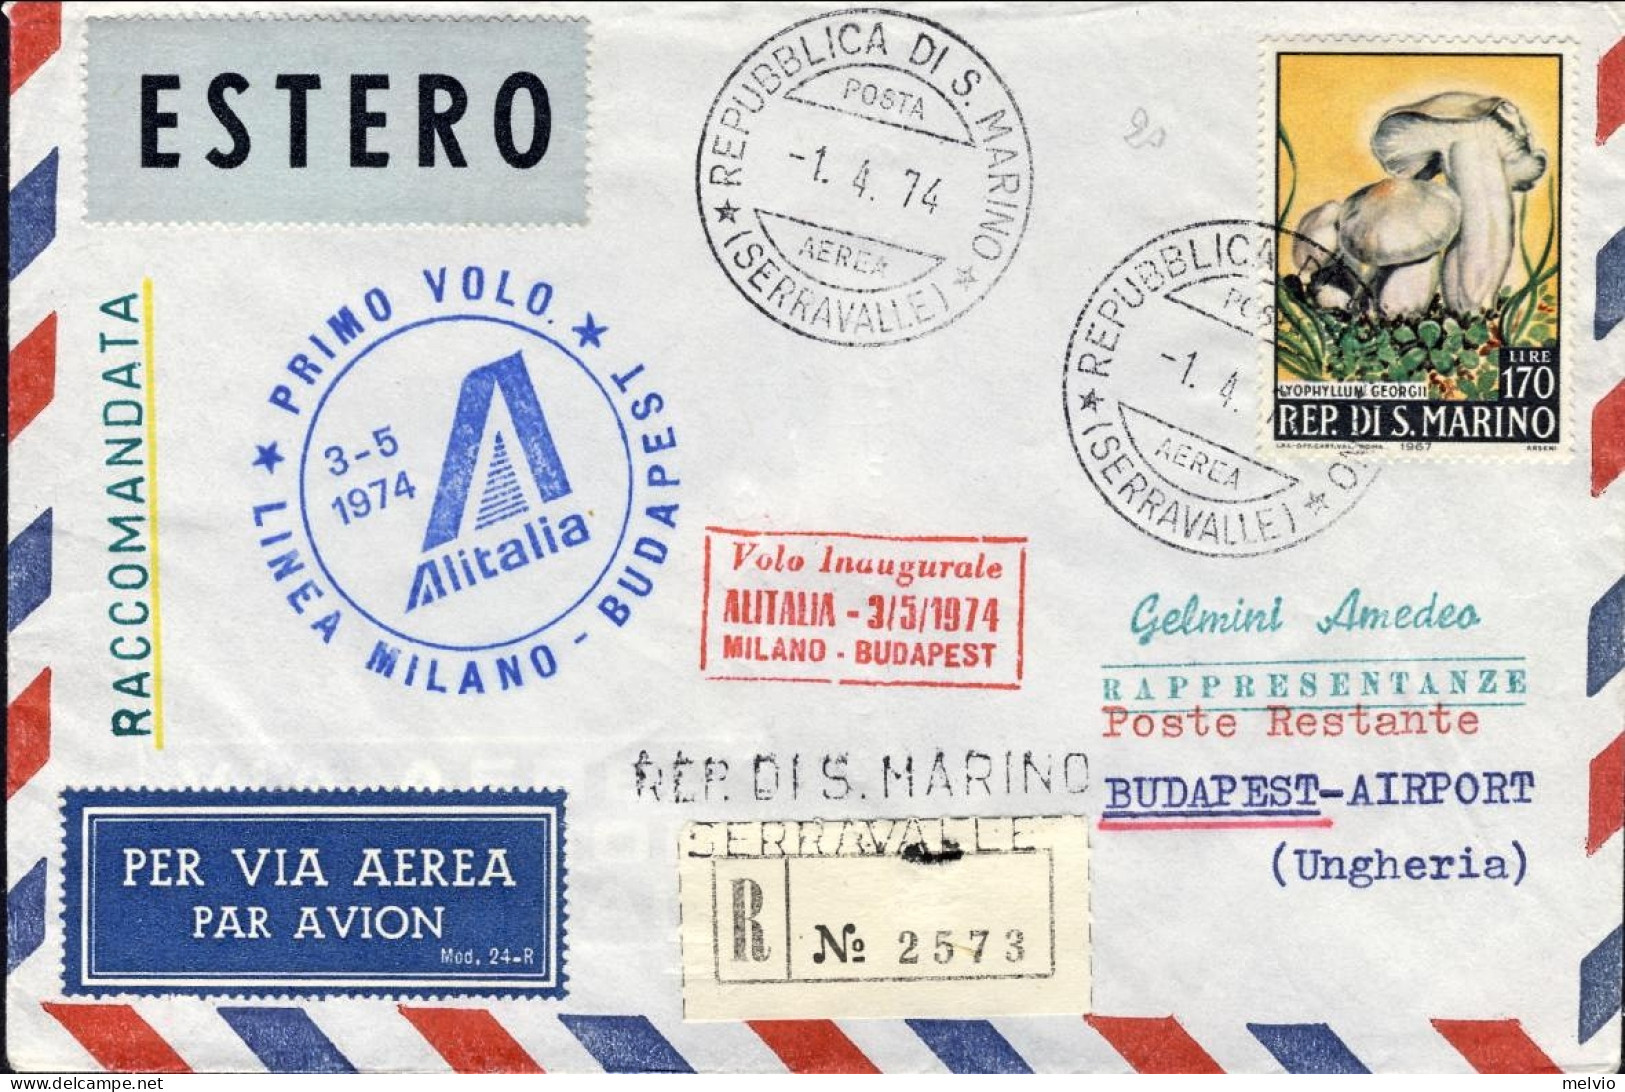 San Marino-1974 Raccomandata I^volo Alitalia AZ 524 Milano Budapest Del 3 Maggio - Airmail